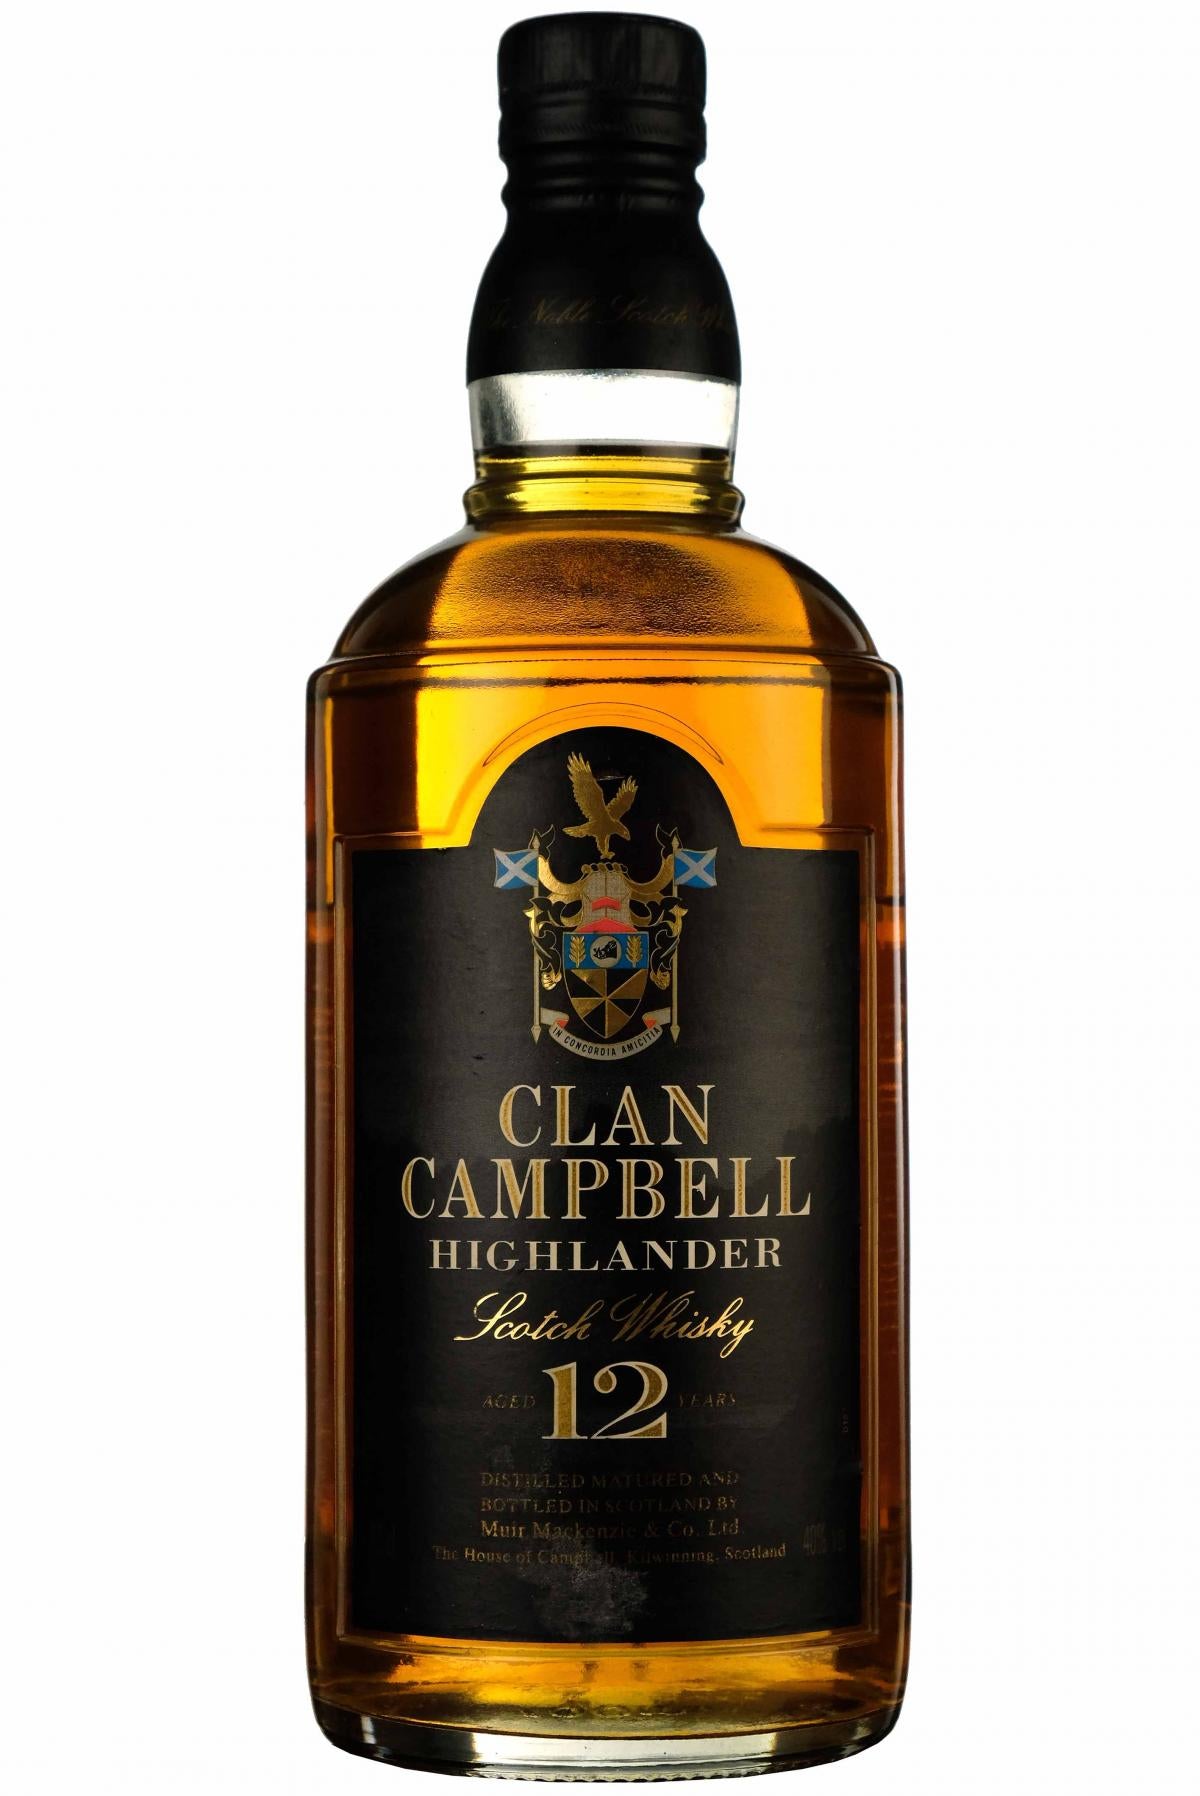 Clan Campbell 12 year old highlander single malt scotch whisky whiskey